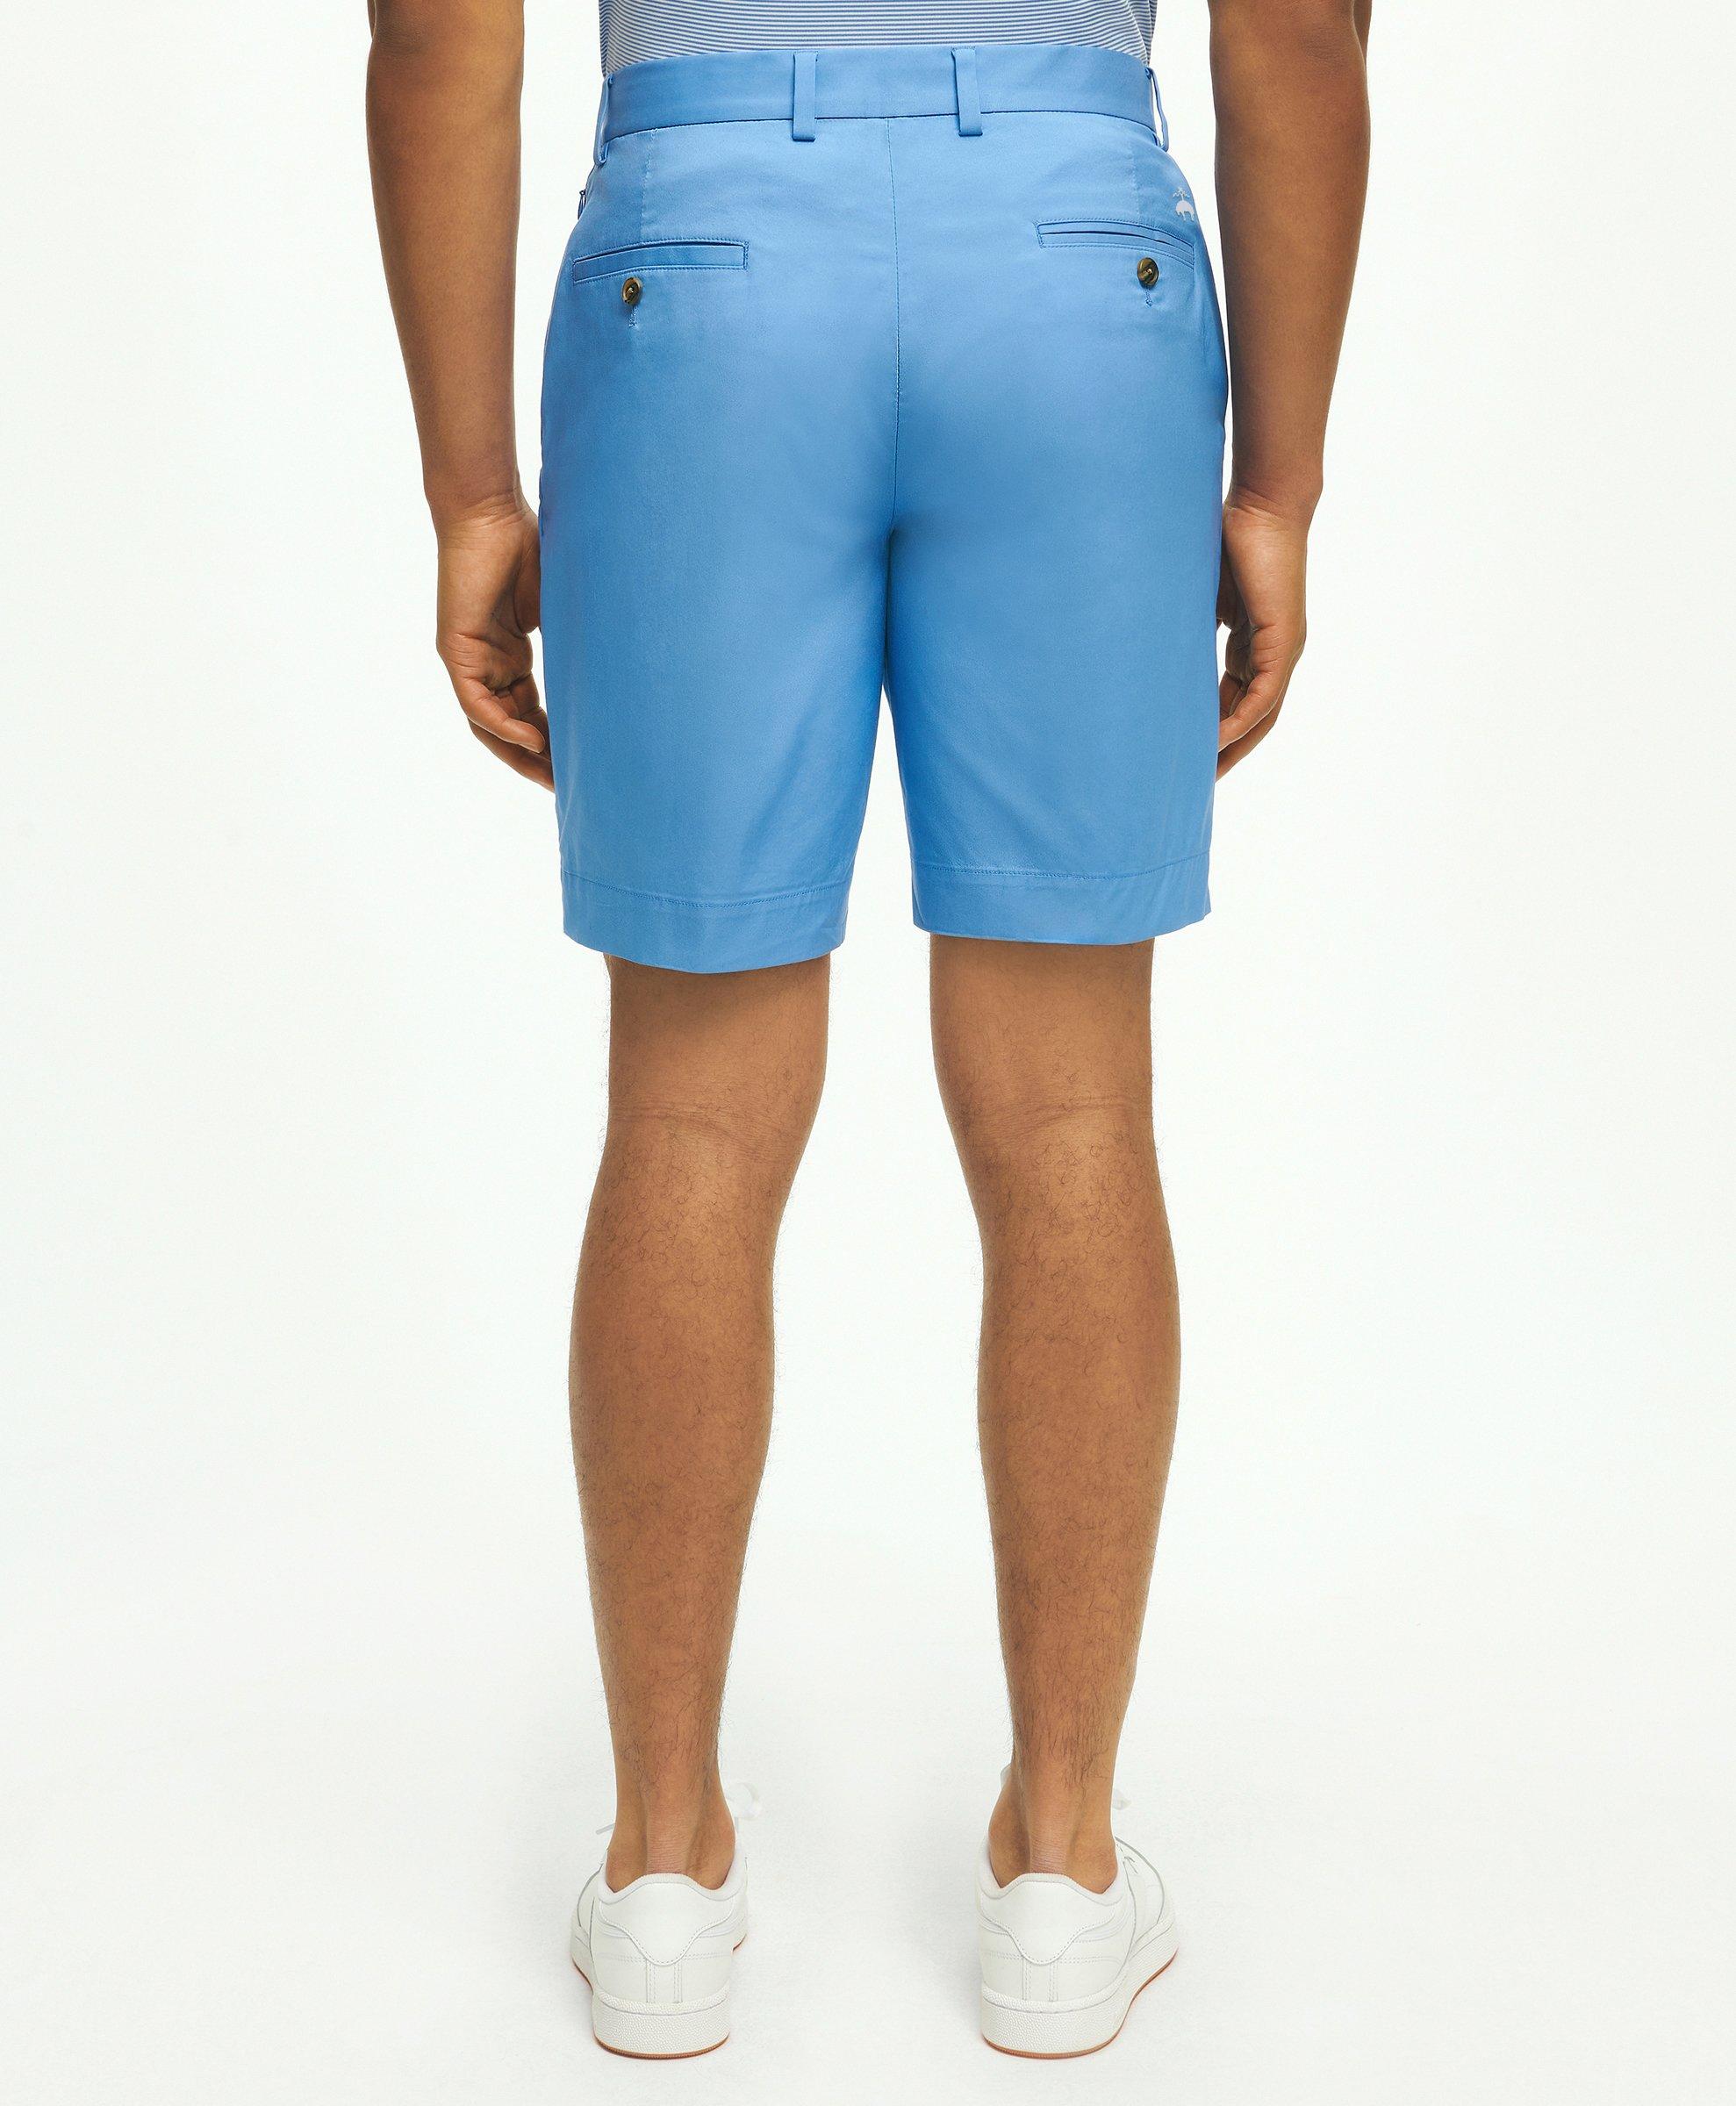 Shop Men's Shorts | Chino, Gym, Active & Swimwear | Brooks Brothers